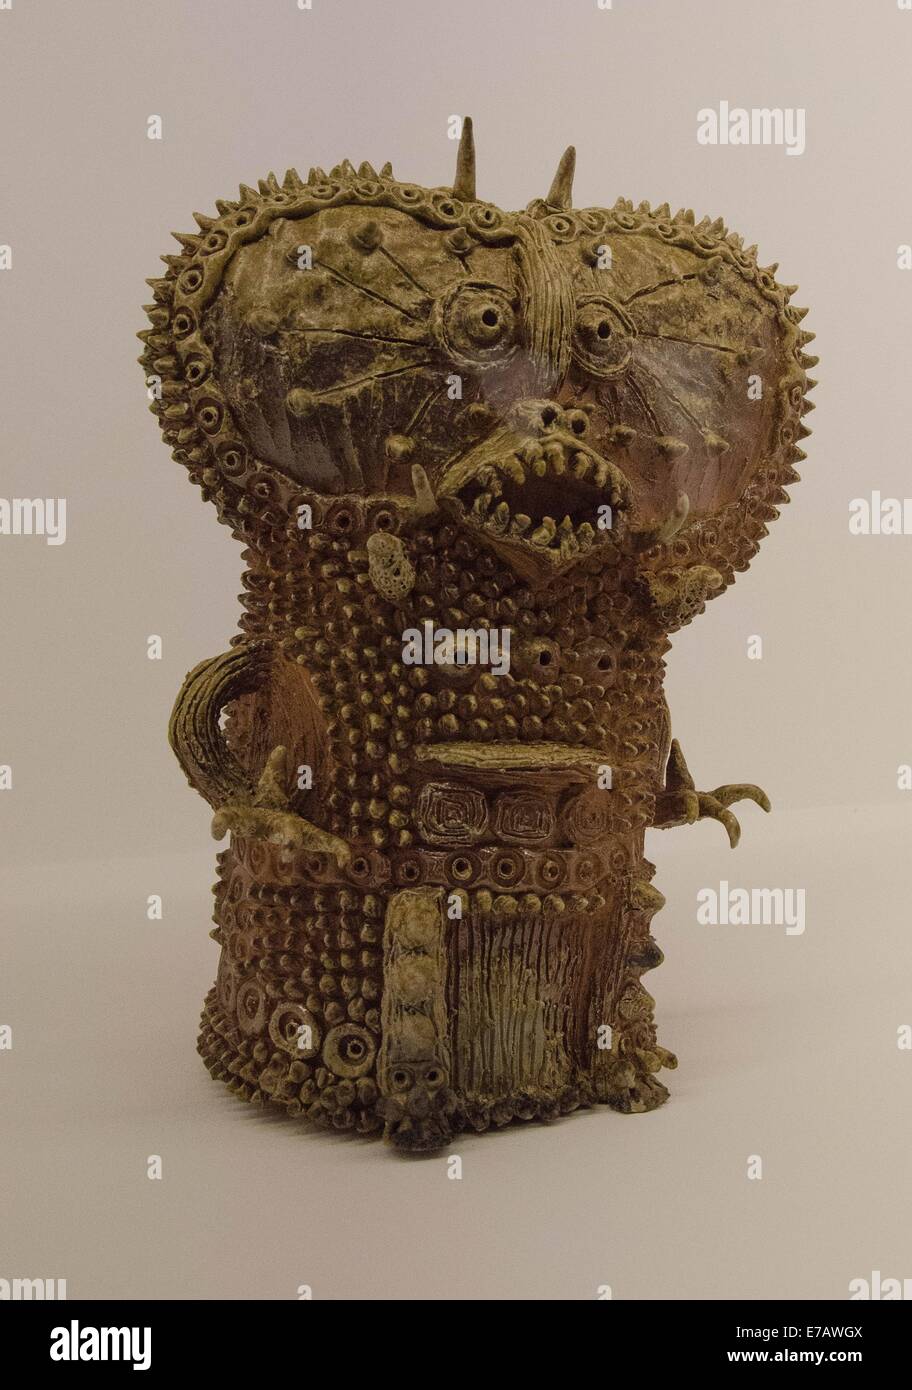 Bienal de Venecia 2013, artista japonés Shinichi Sawada, Art Brut monstruosas criaturas hechas de arcilla esculturas Foto de stock